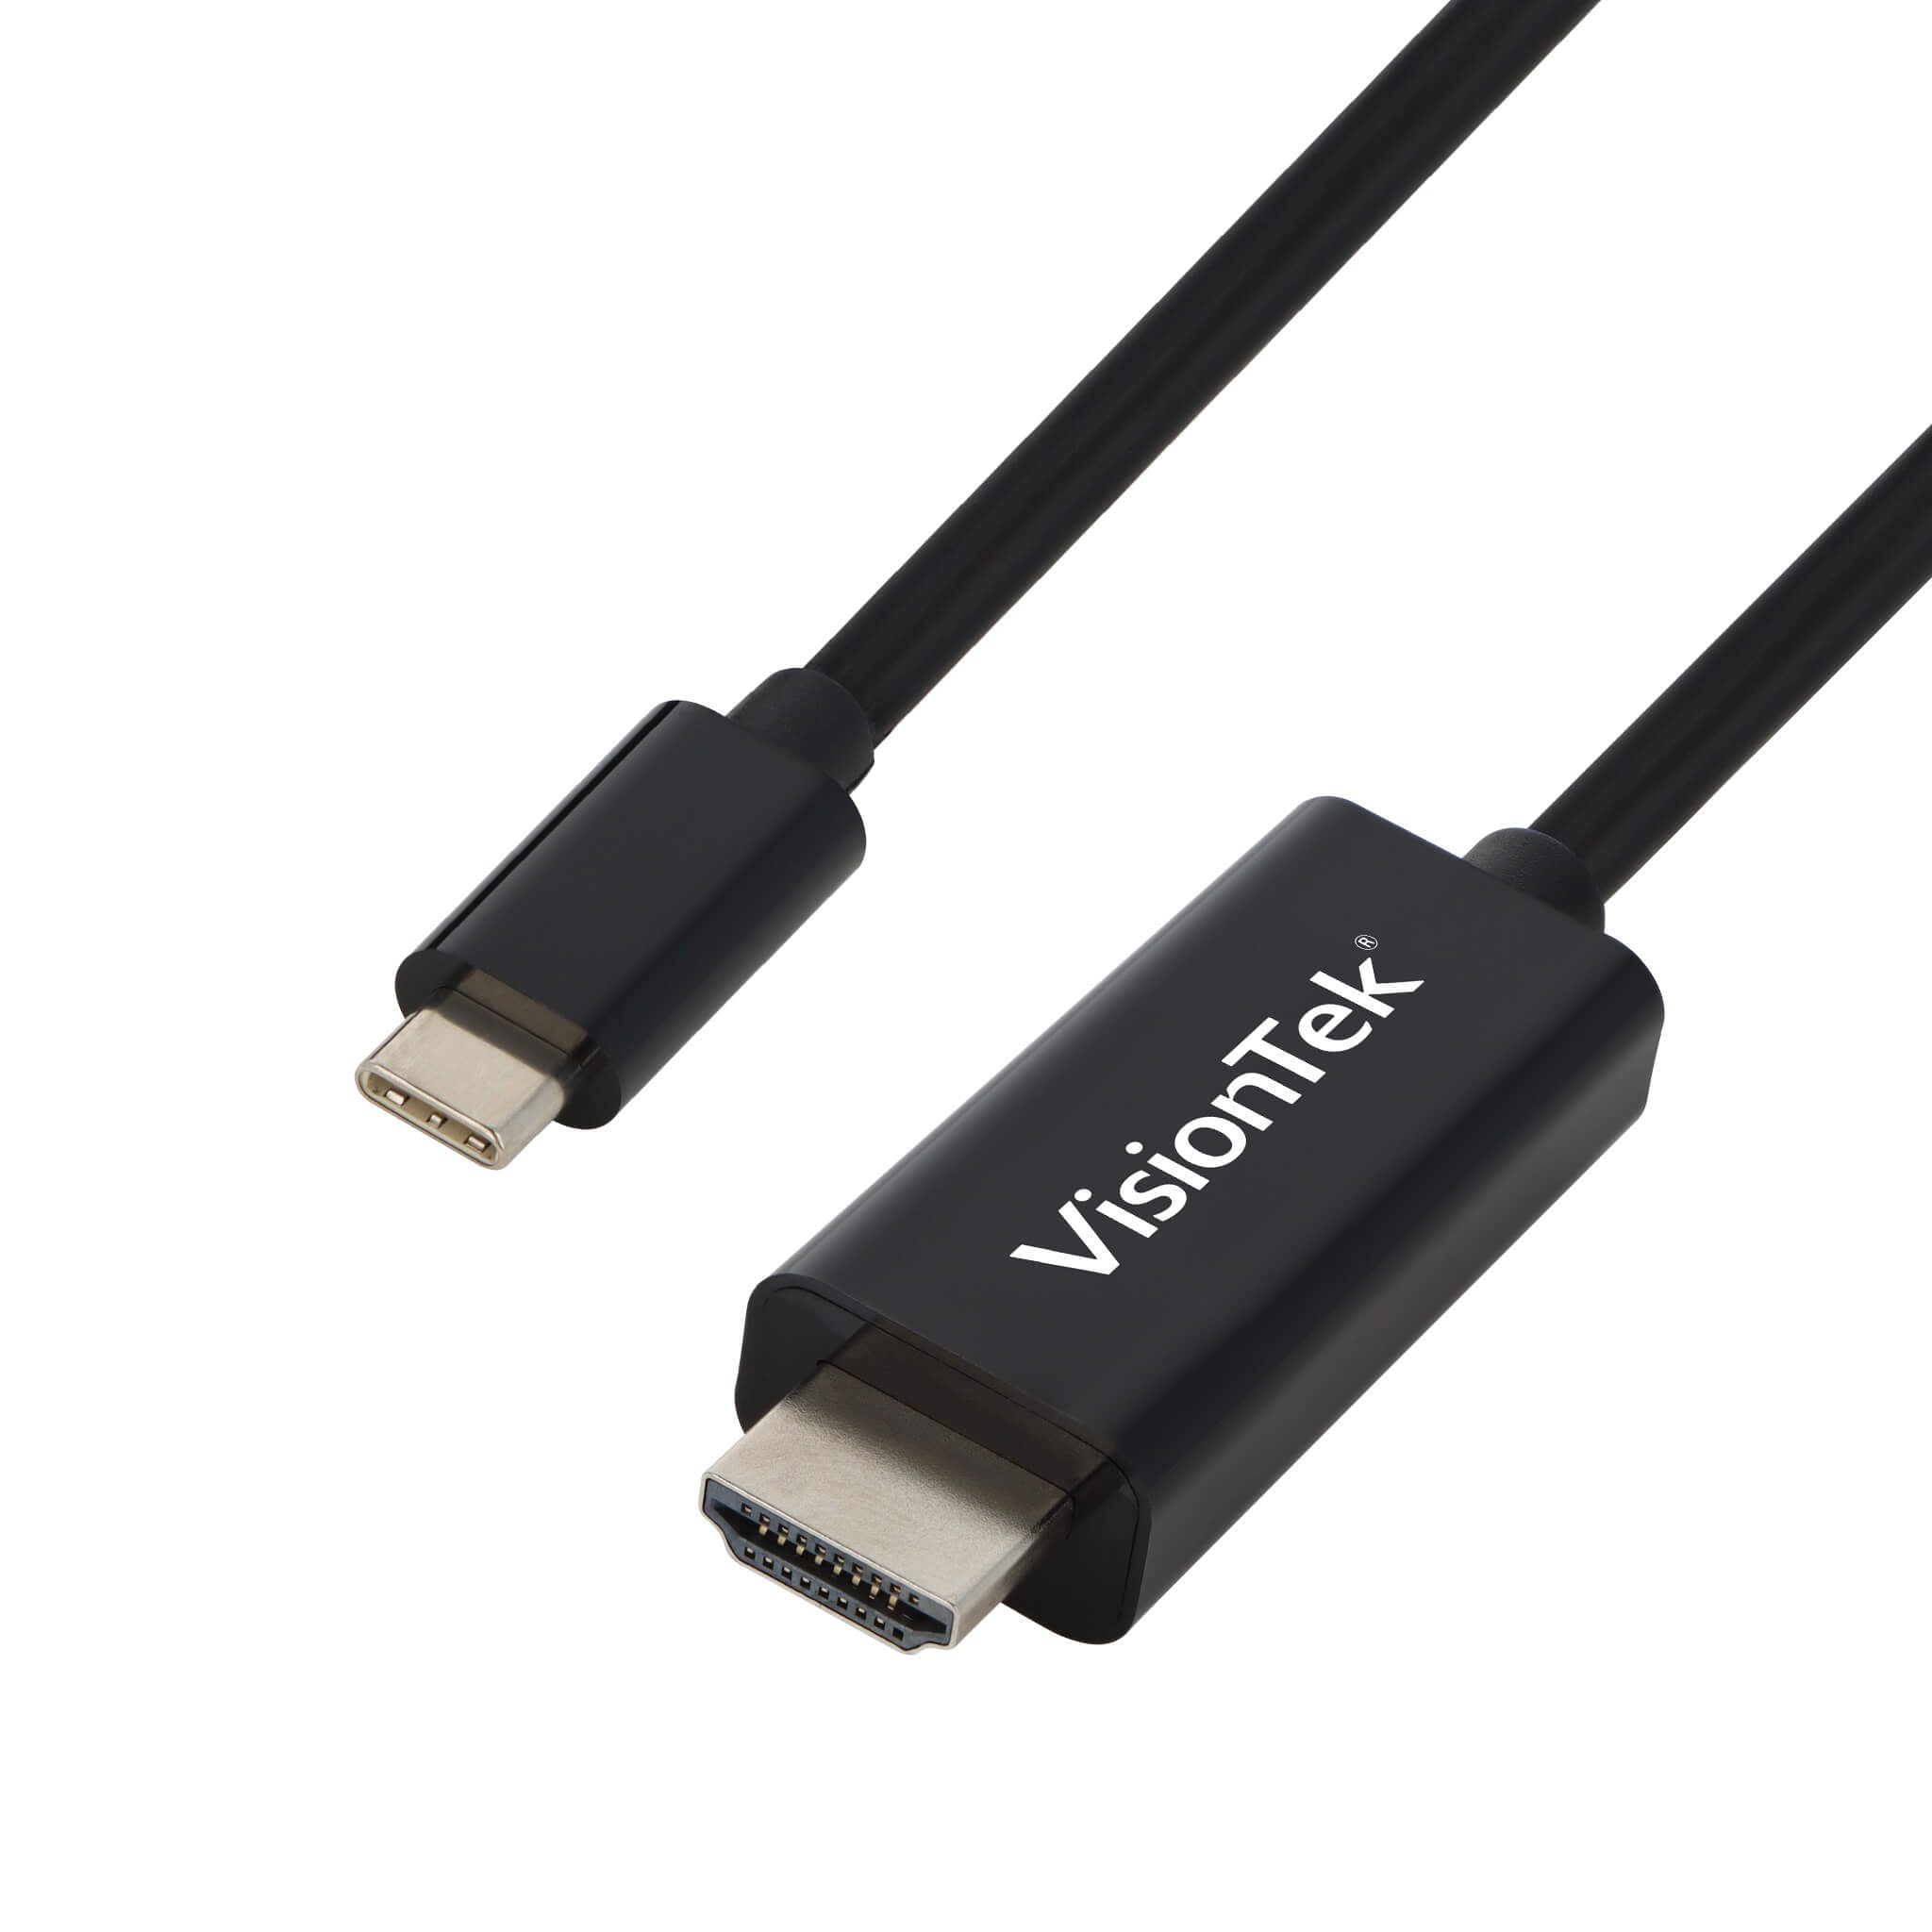 USB-C to Mini HDMI Cable